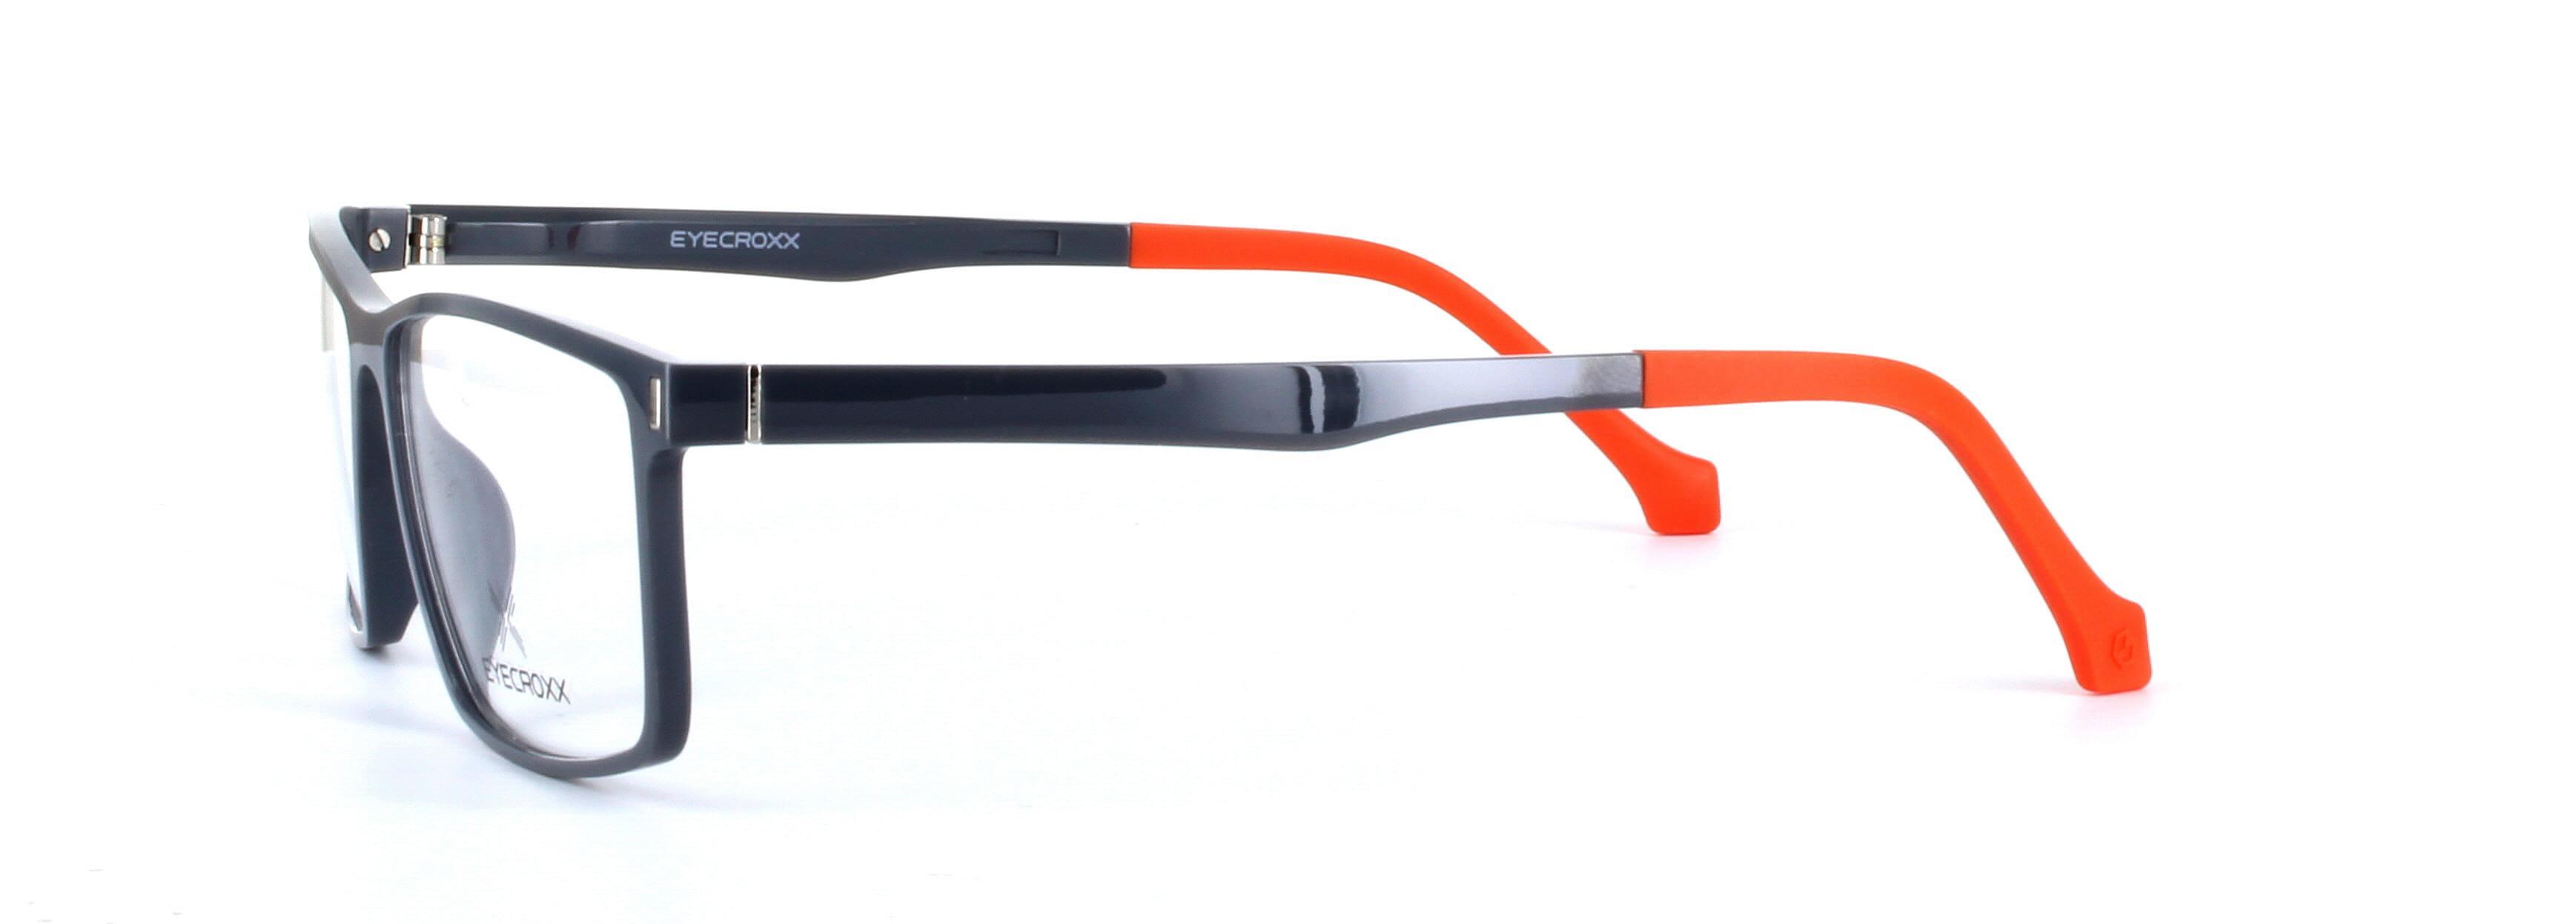 Eyecroxx 587-C4 Grey and Orange Full Rim Rectangular Plastic Glasses - Image View 2